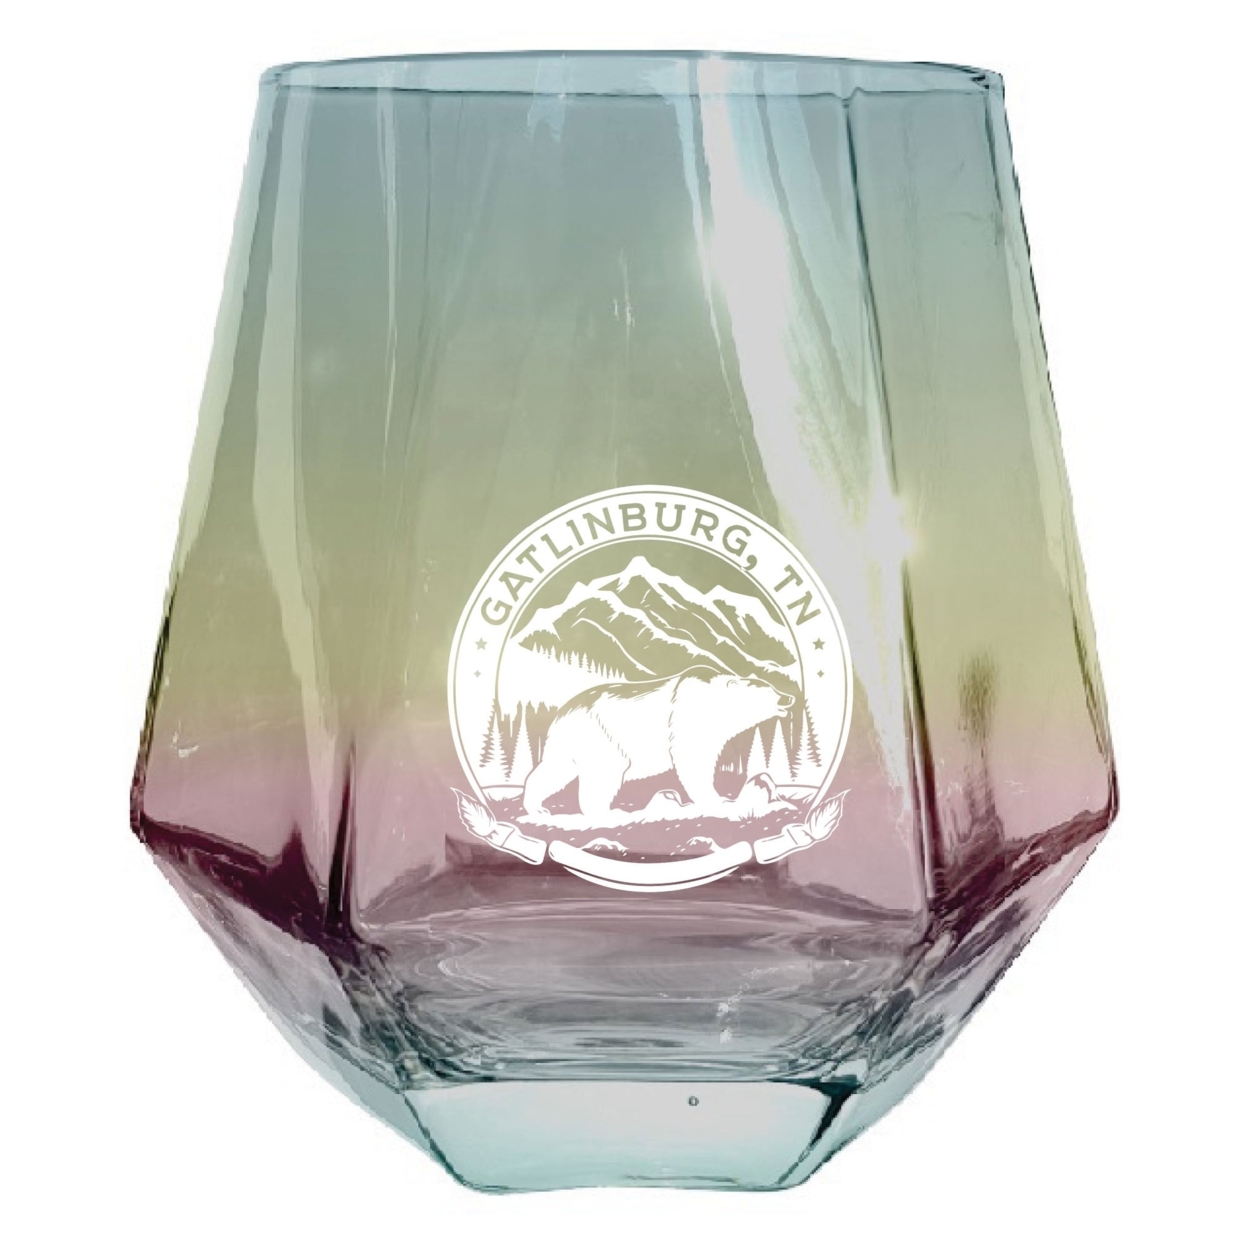 Gatlinburg Tennessee Laser Etched Souvenir Wine Glass Diamond 10 Oz - Clear